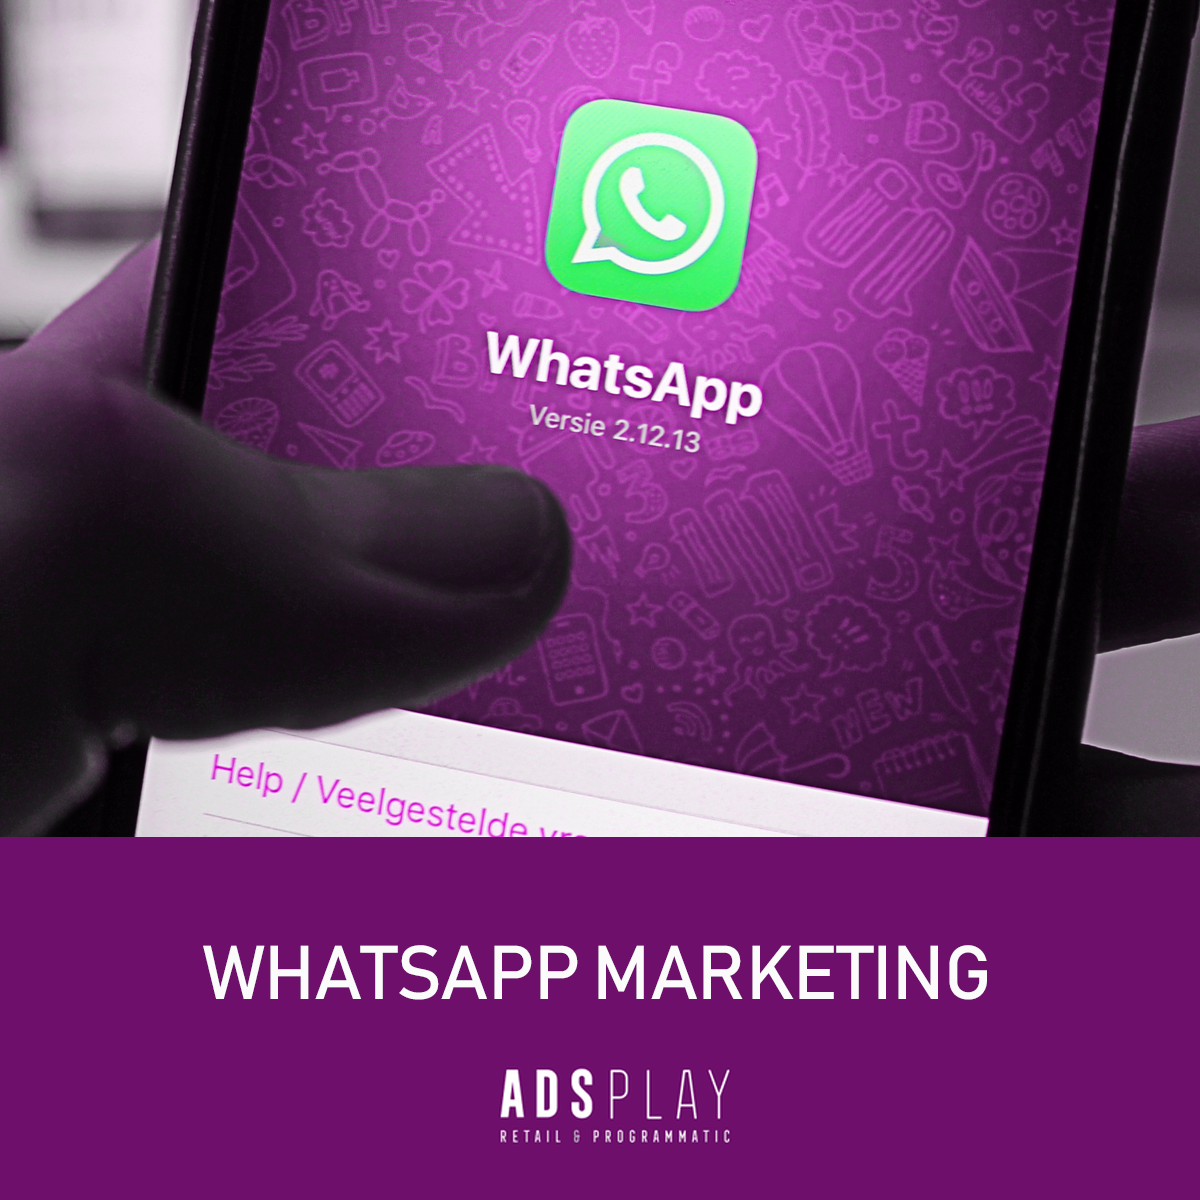 WhatsApp Marketing: por que usar?